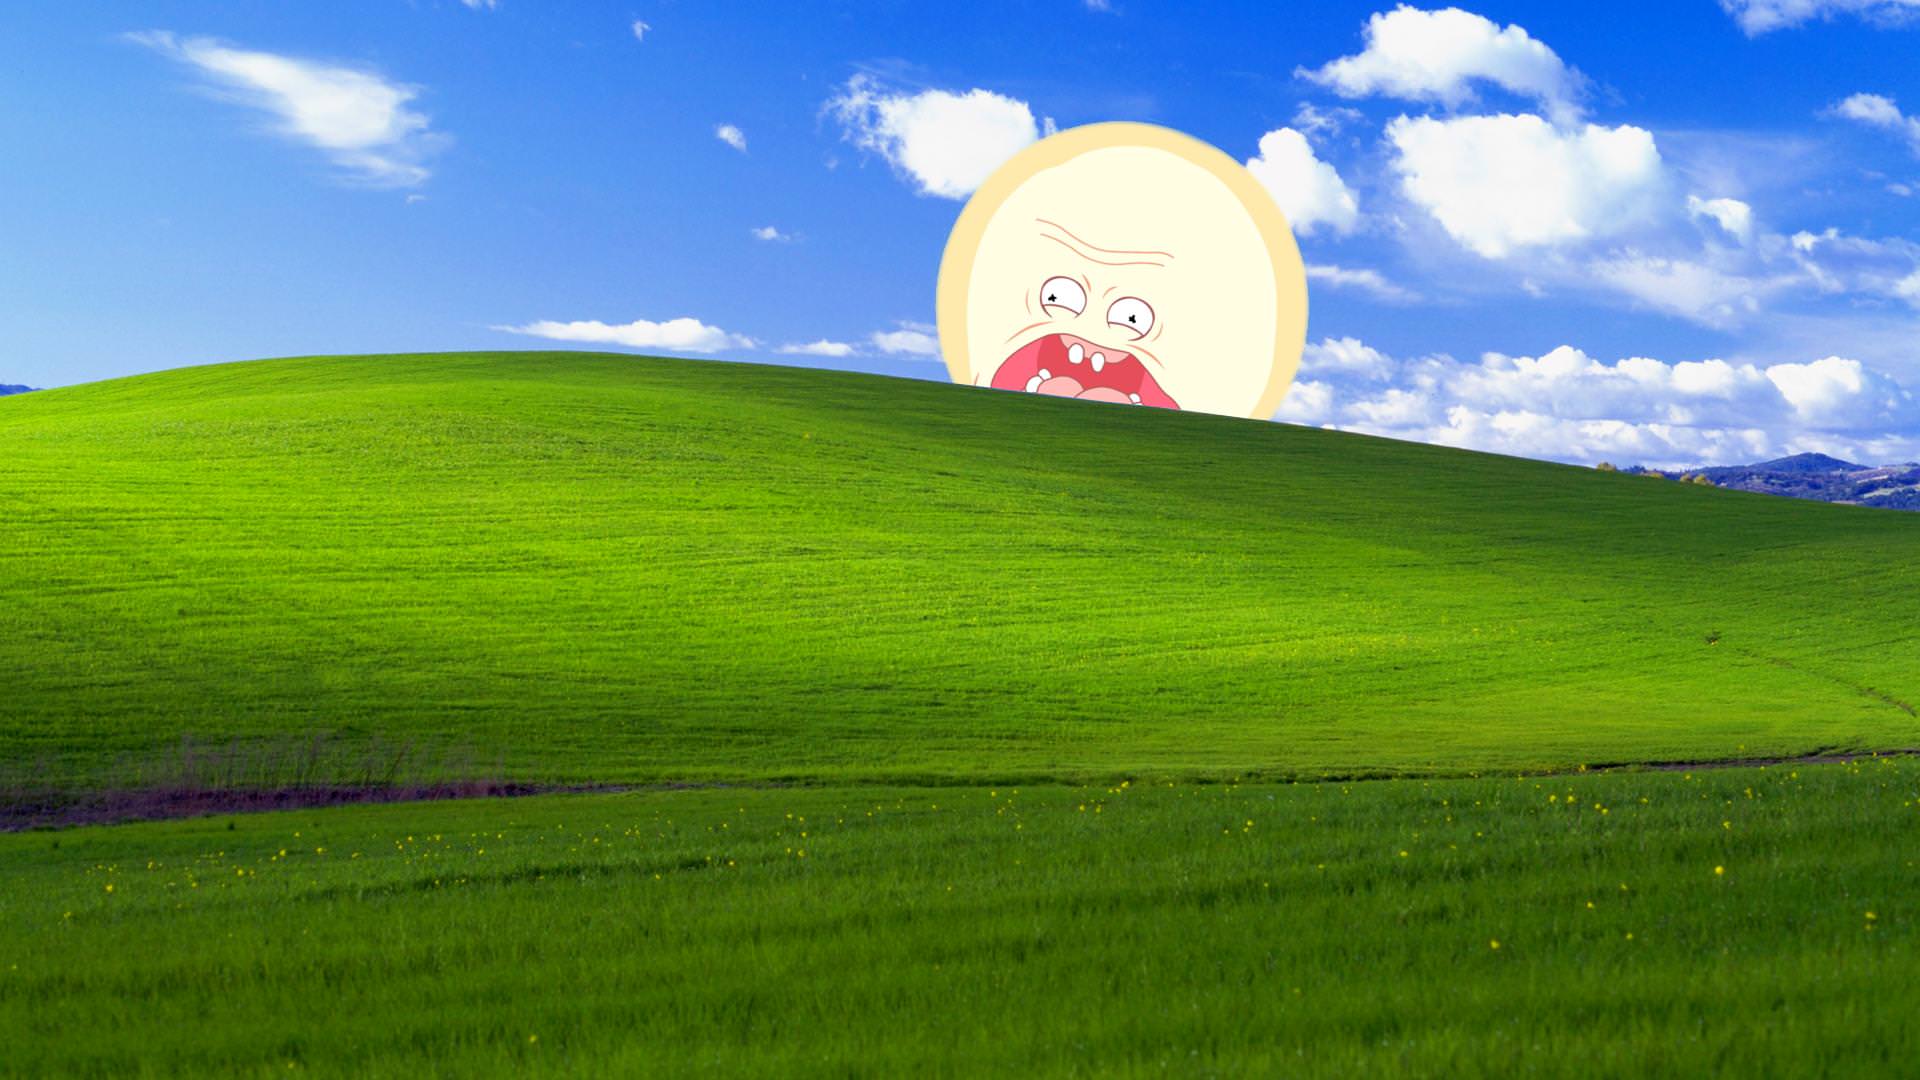 Windows XP meme